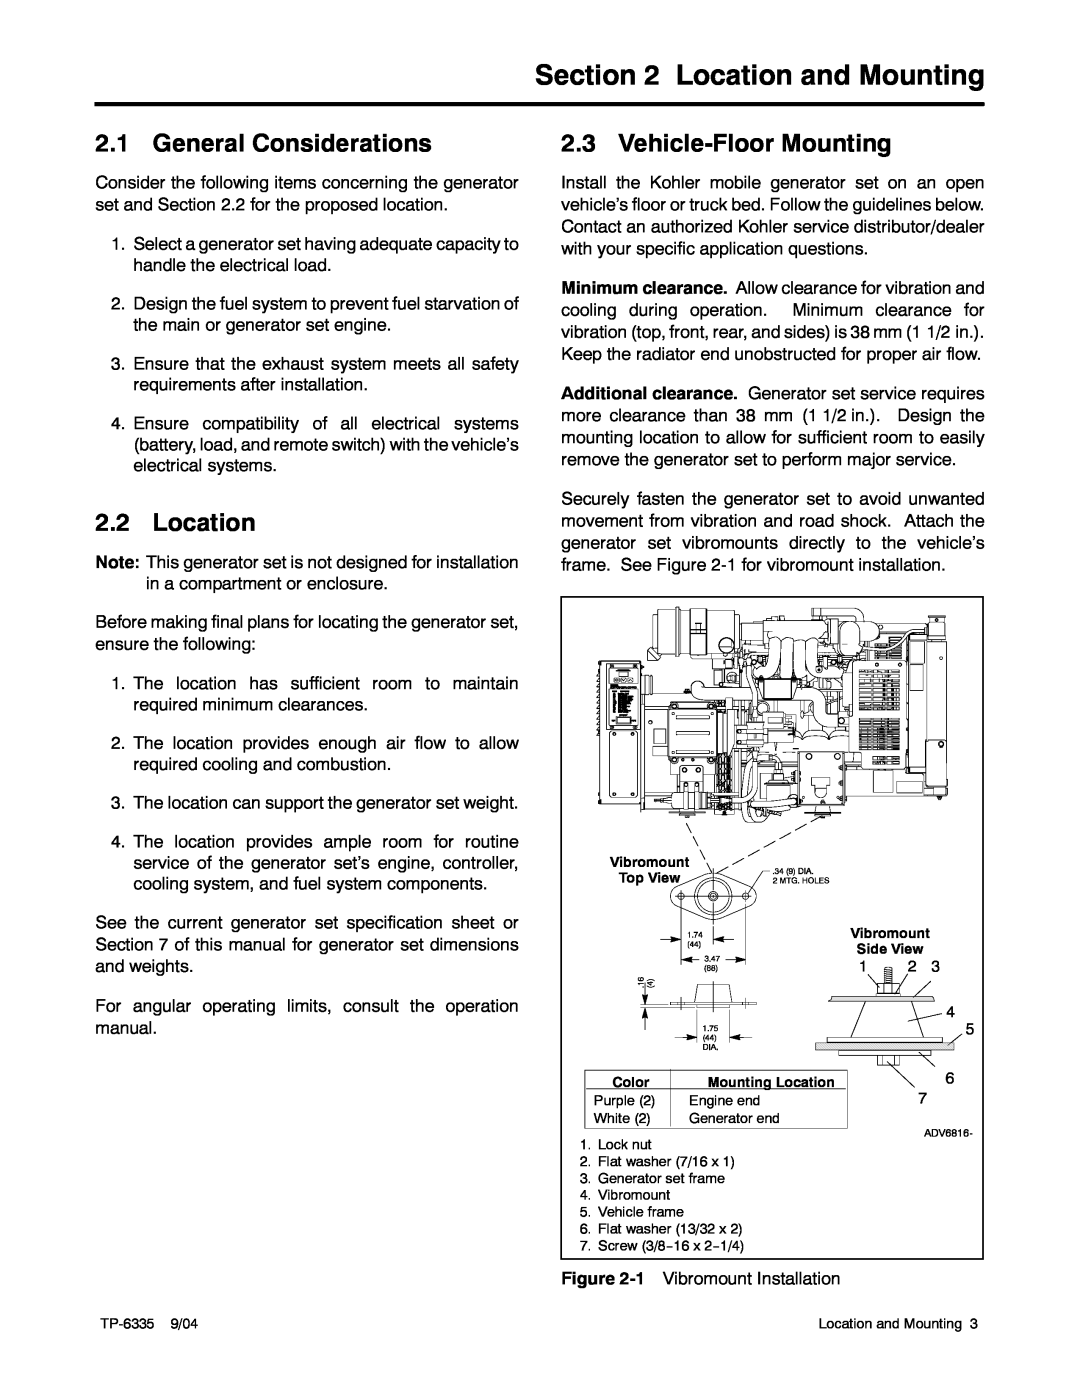 Kohler 13ERG, 15ERG, 10ERG manual Location and Mounting, General Considerations, Vehicle-Floor Mounting 